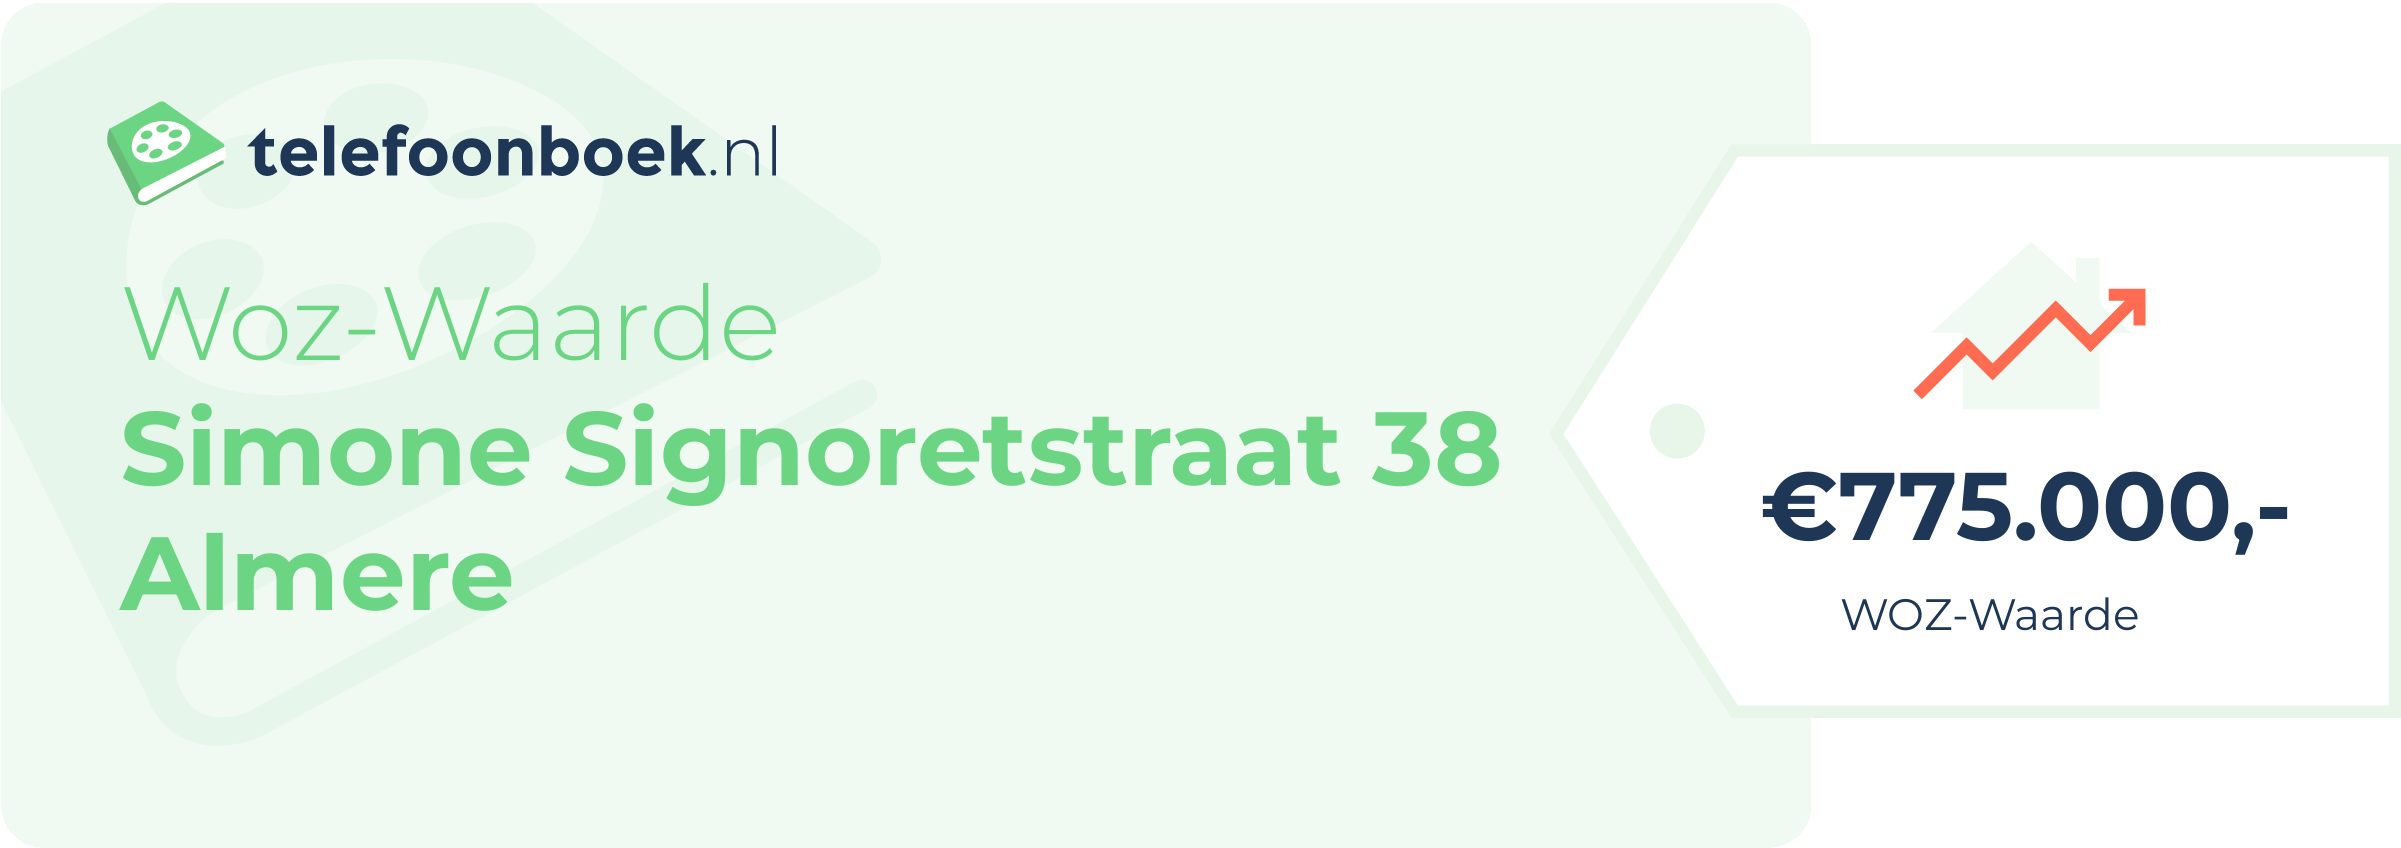 WOZ-waarde Simone Signoretstraat 38 Almere